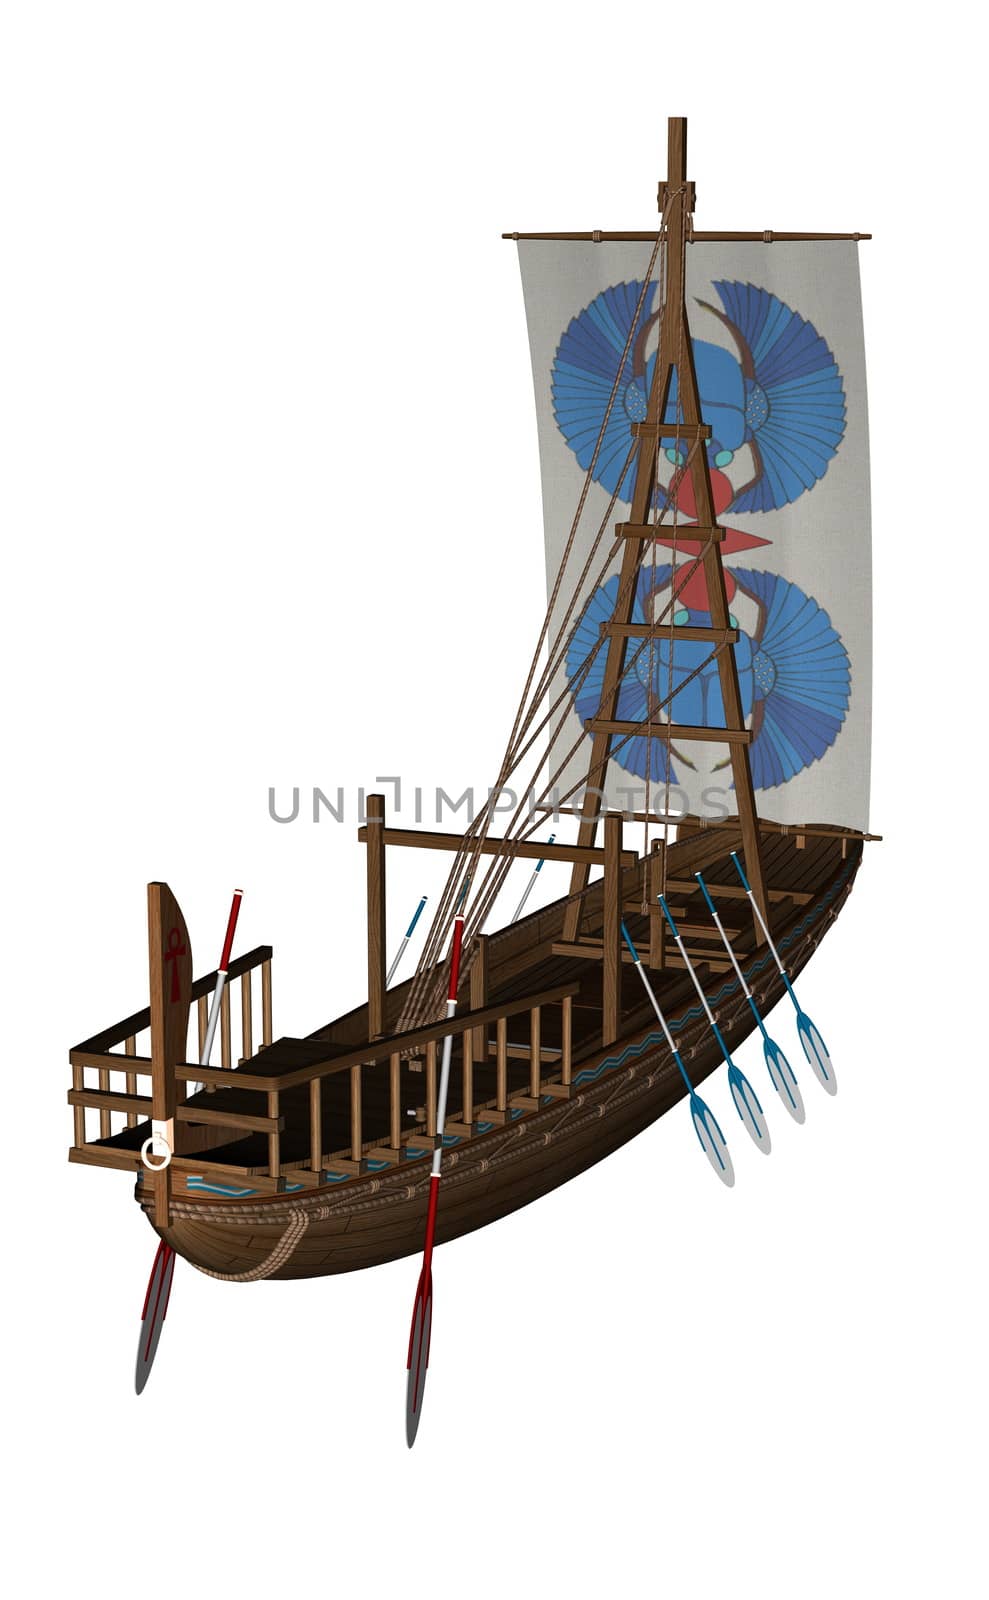 Ancient sailing boat - 3D render by Elenaphotos21